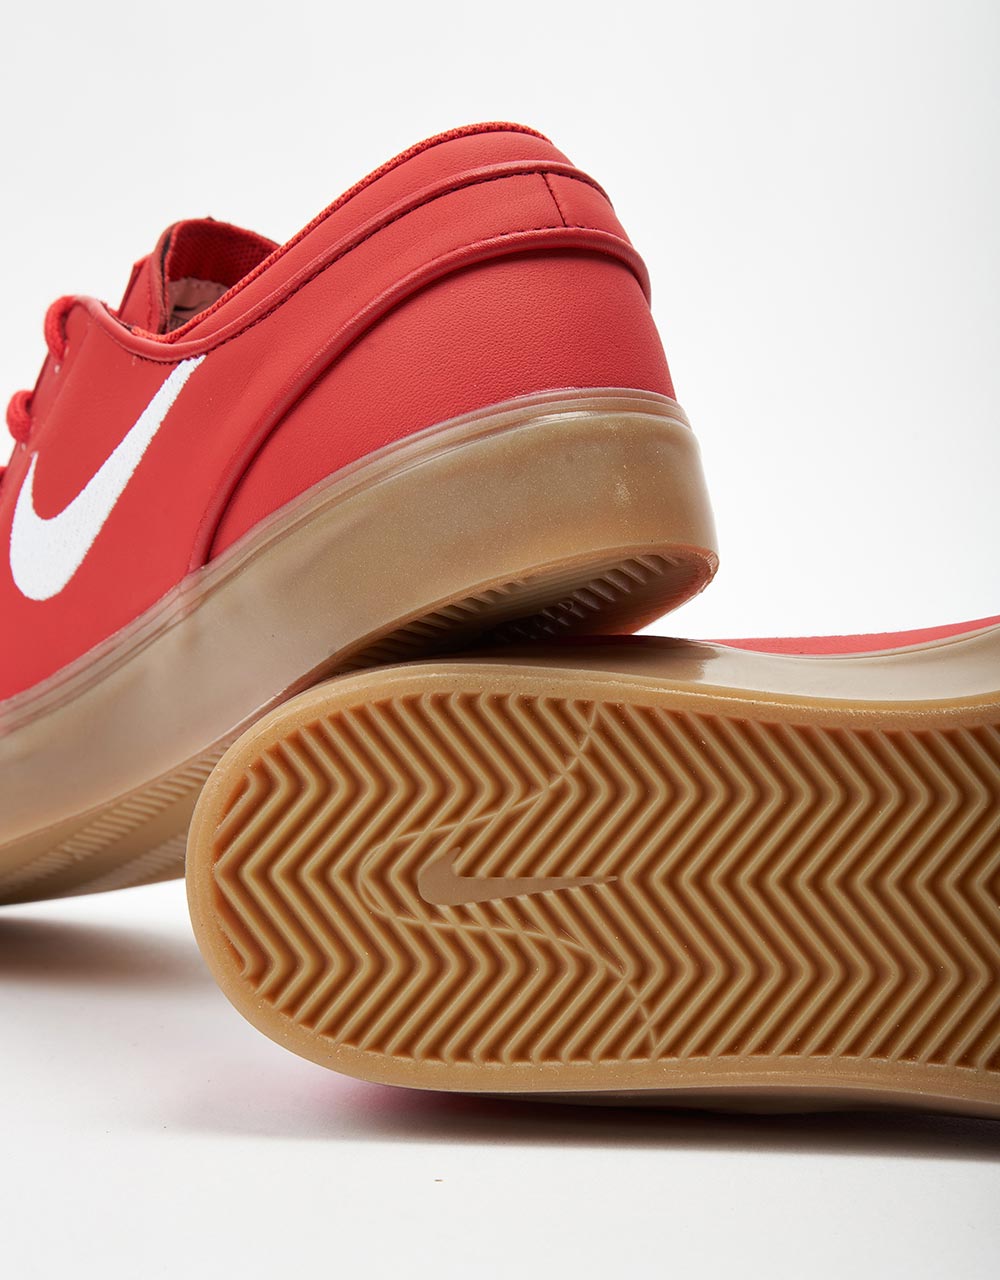 Nike SB Zoom Janoski ISO Skate Shoes - Unviversity Red/White-Universiy Red-Gum Lt Brown